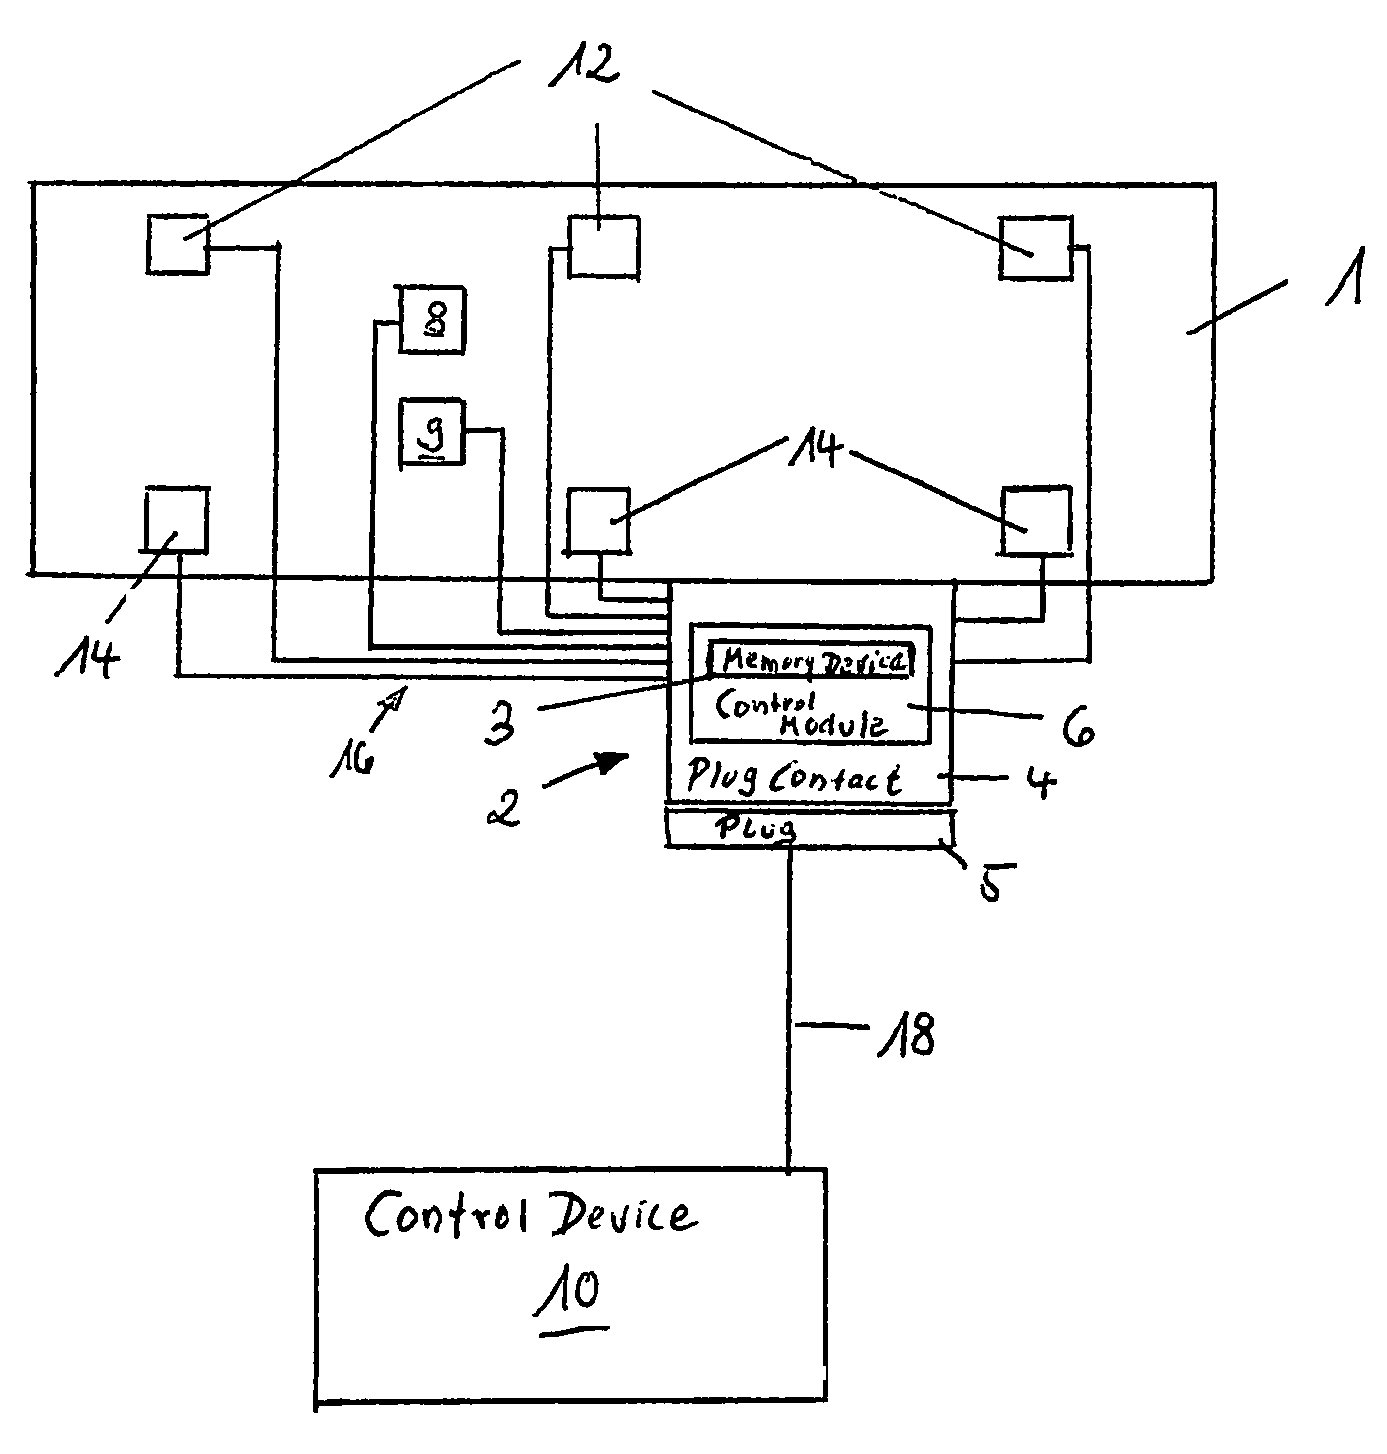 Identification of a modular machine component